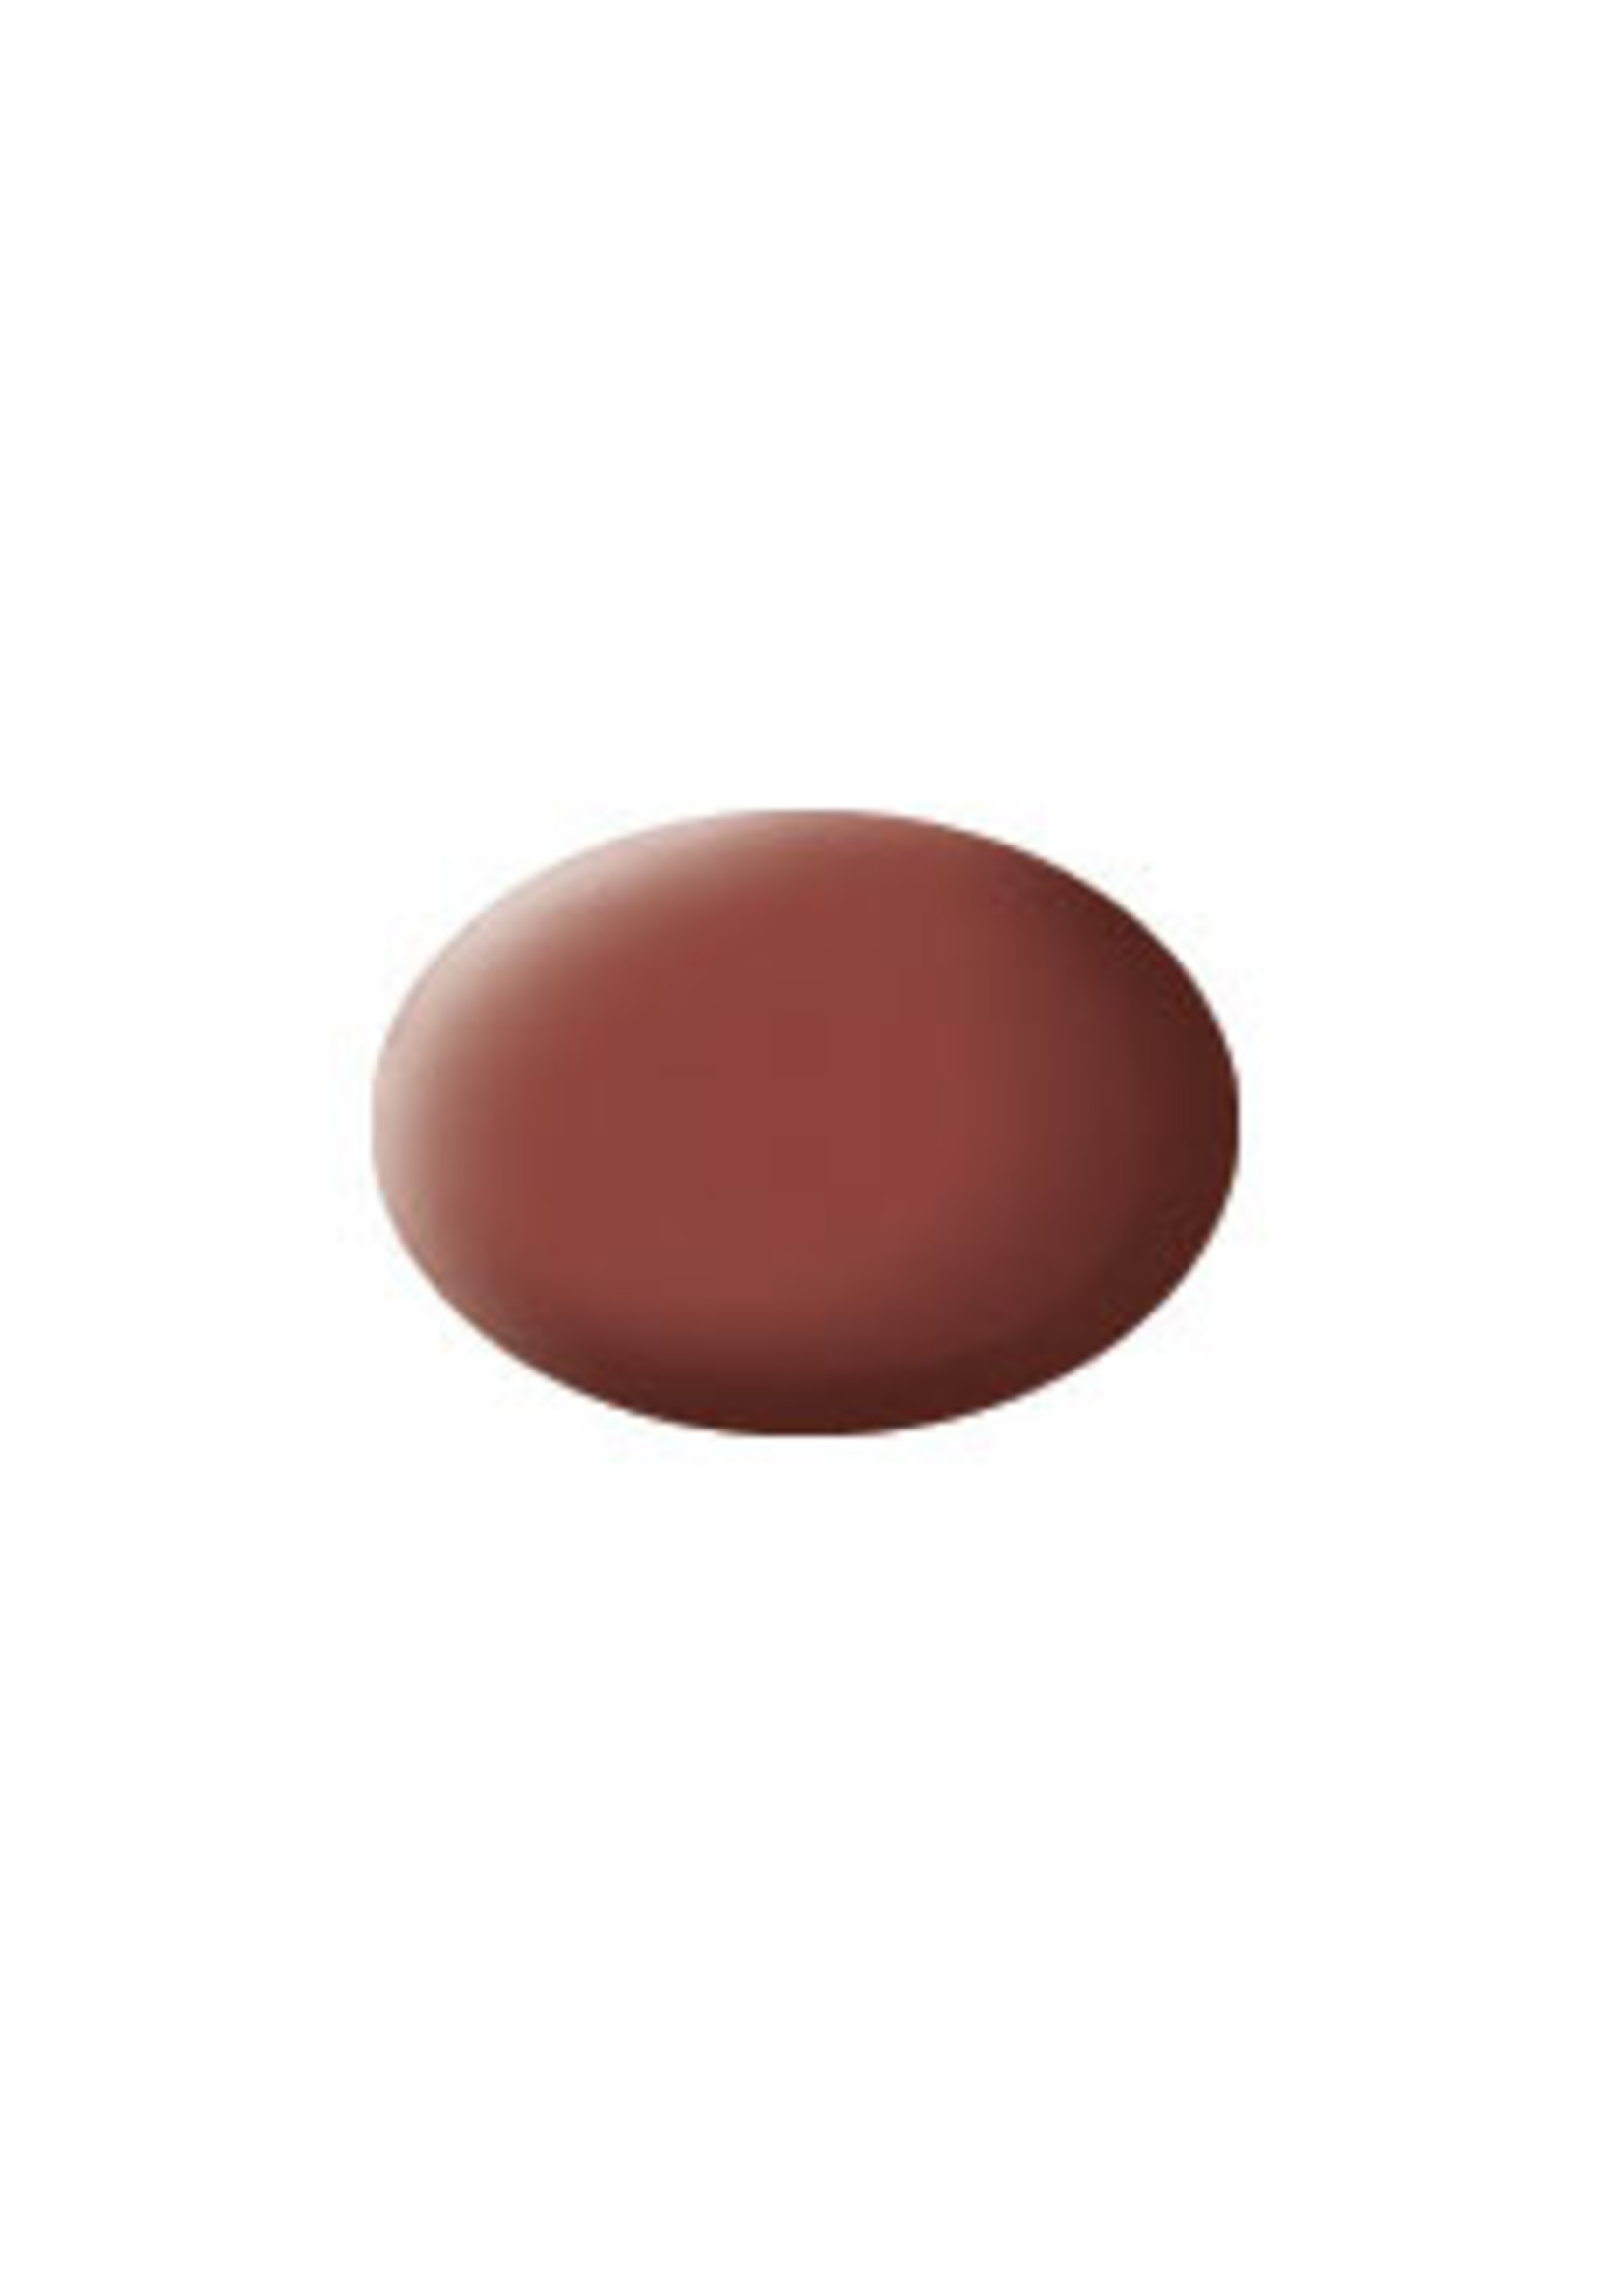 Revell 36137 - Aqua Reddish Brown Matt 18ml